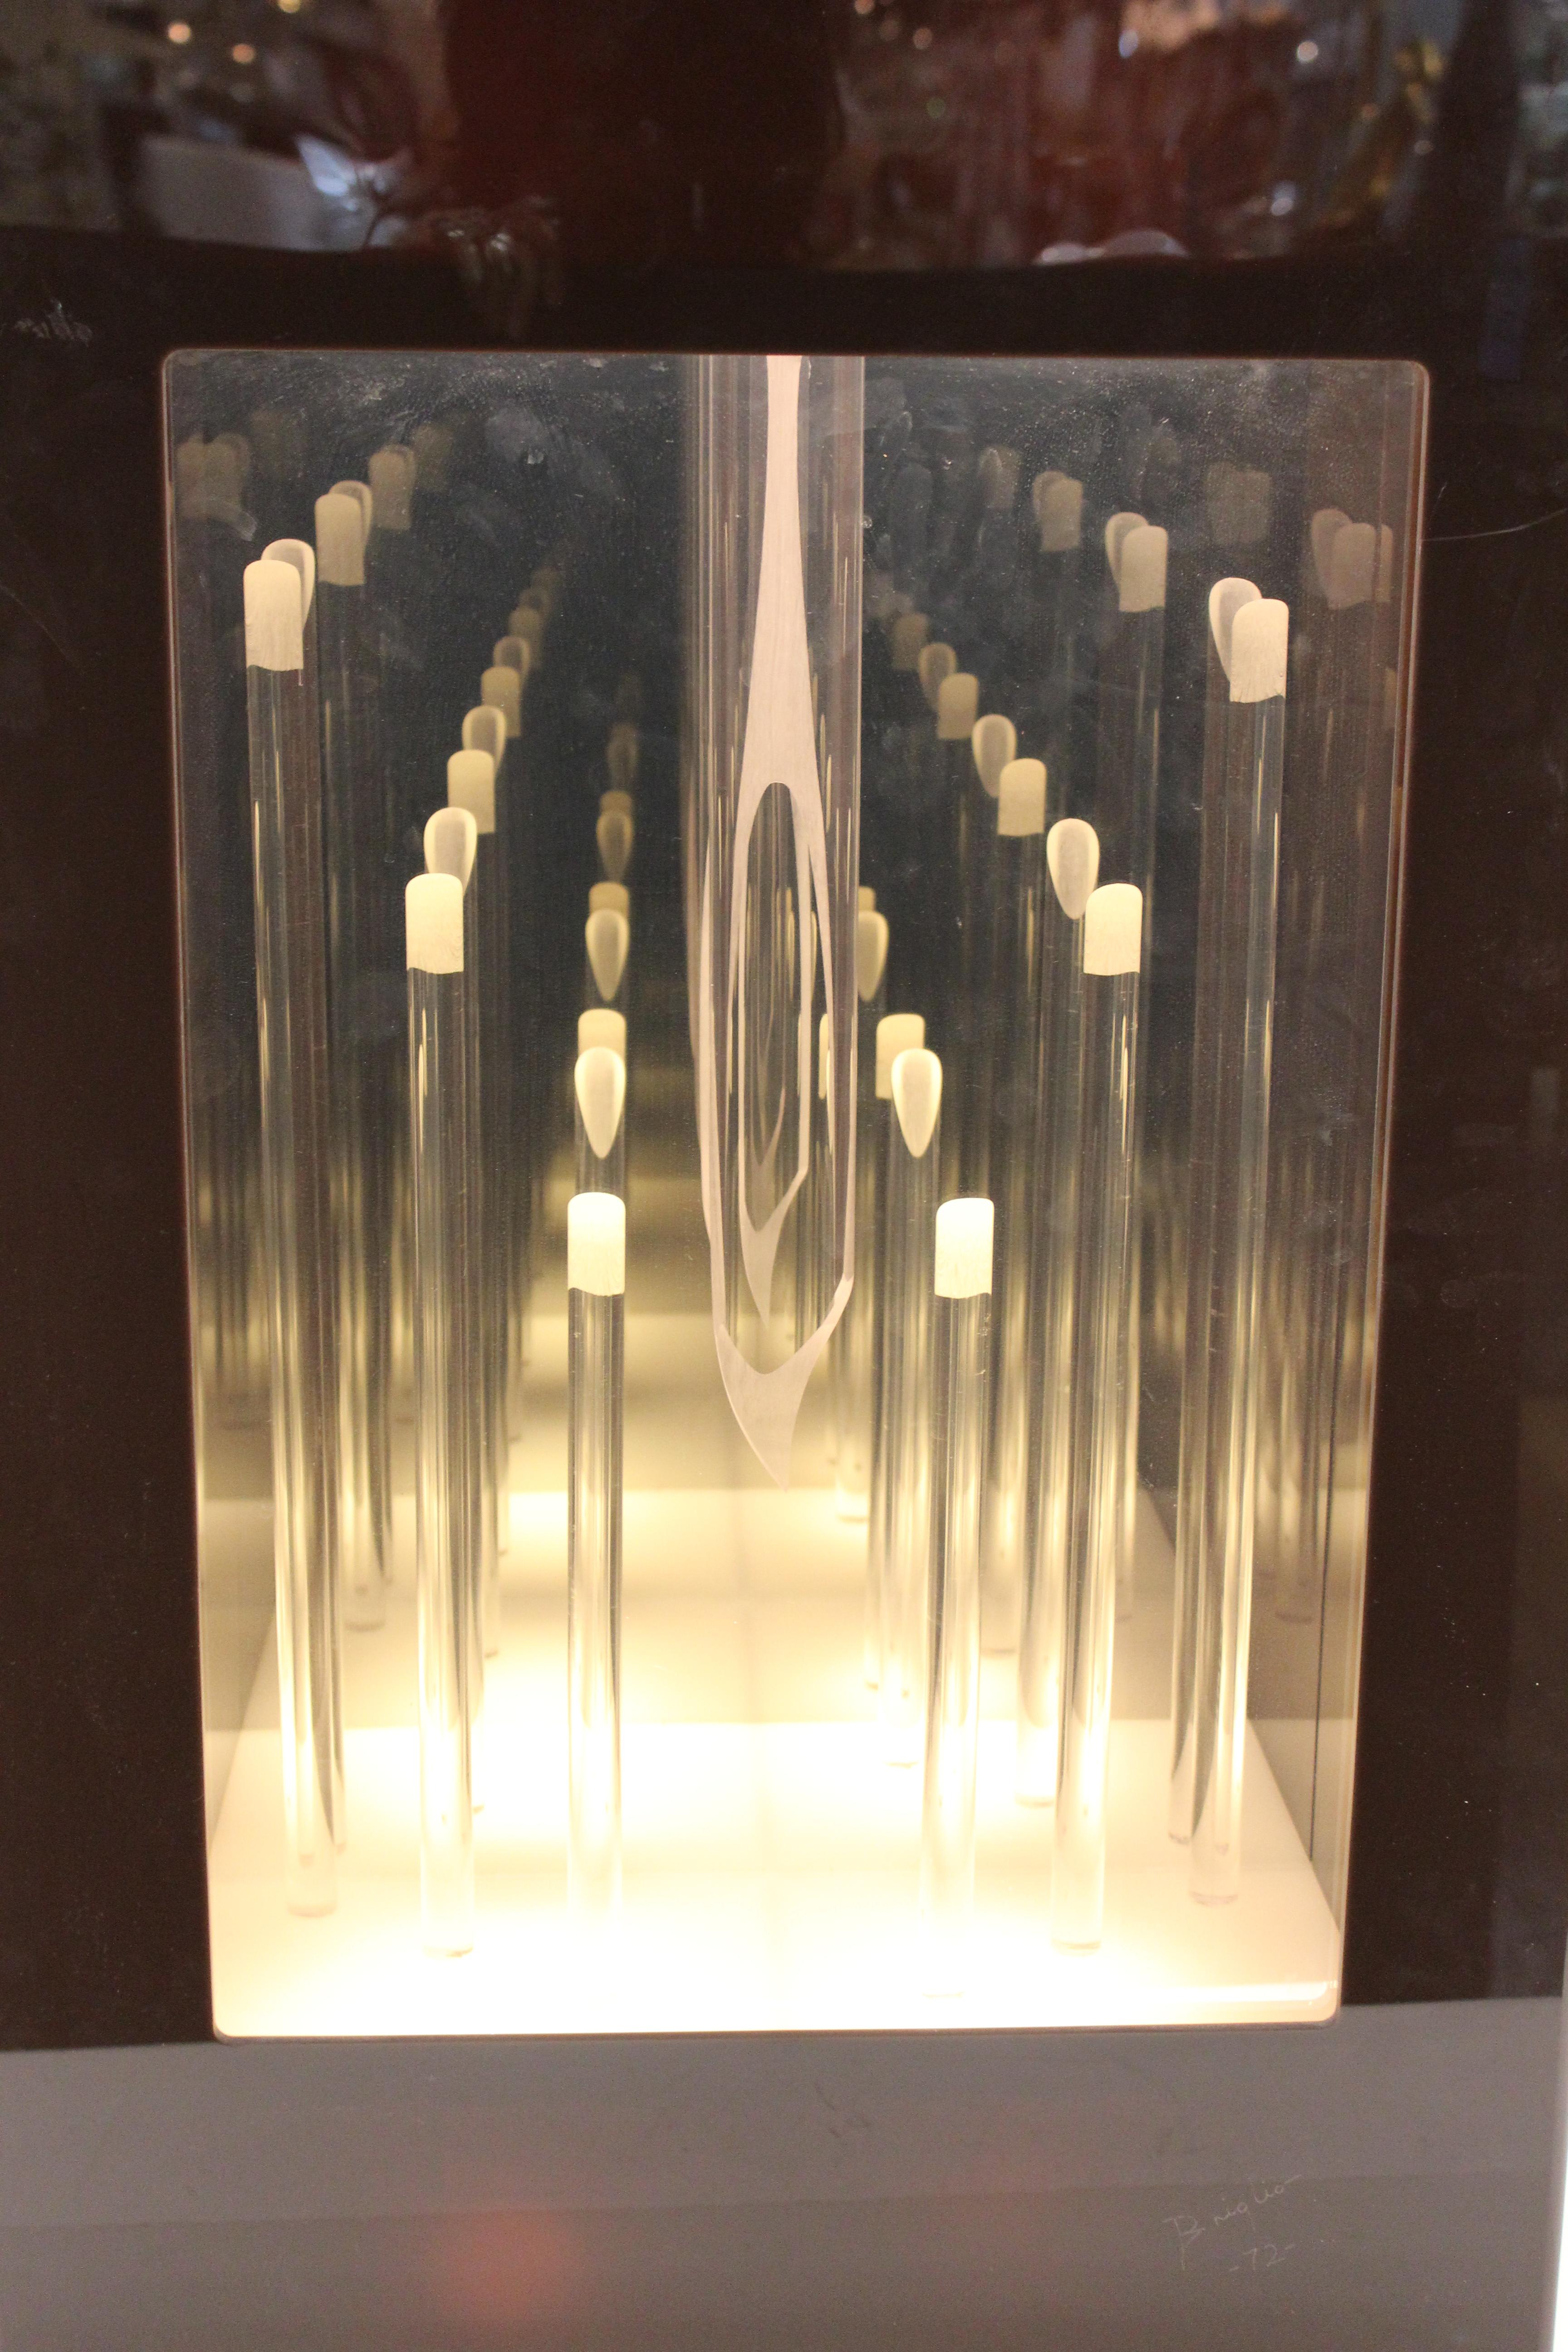 European Modernist Light Box with Sculptural Interior, Signed Briglio